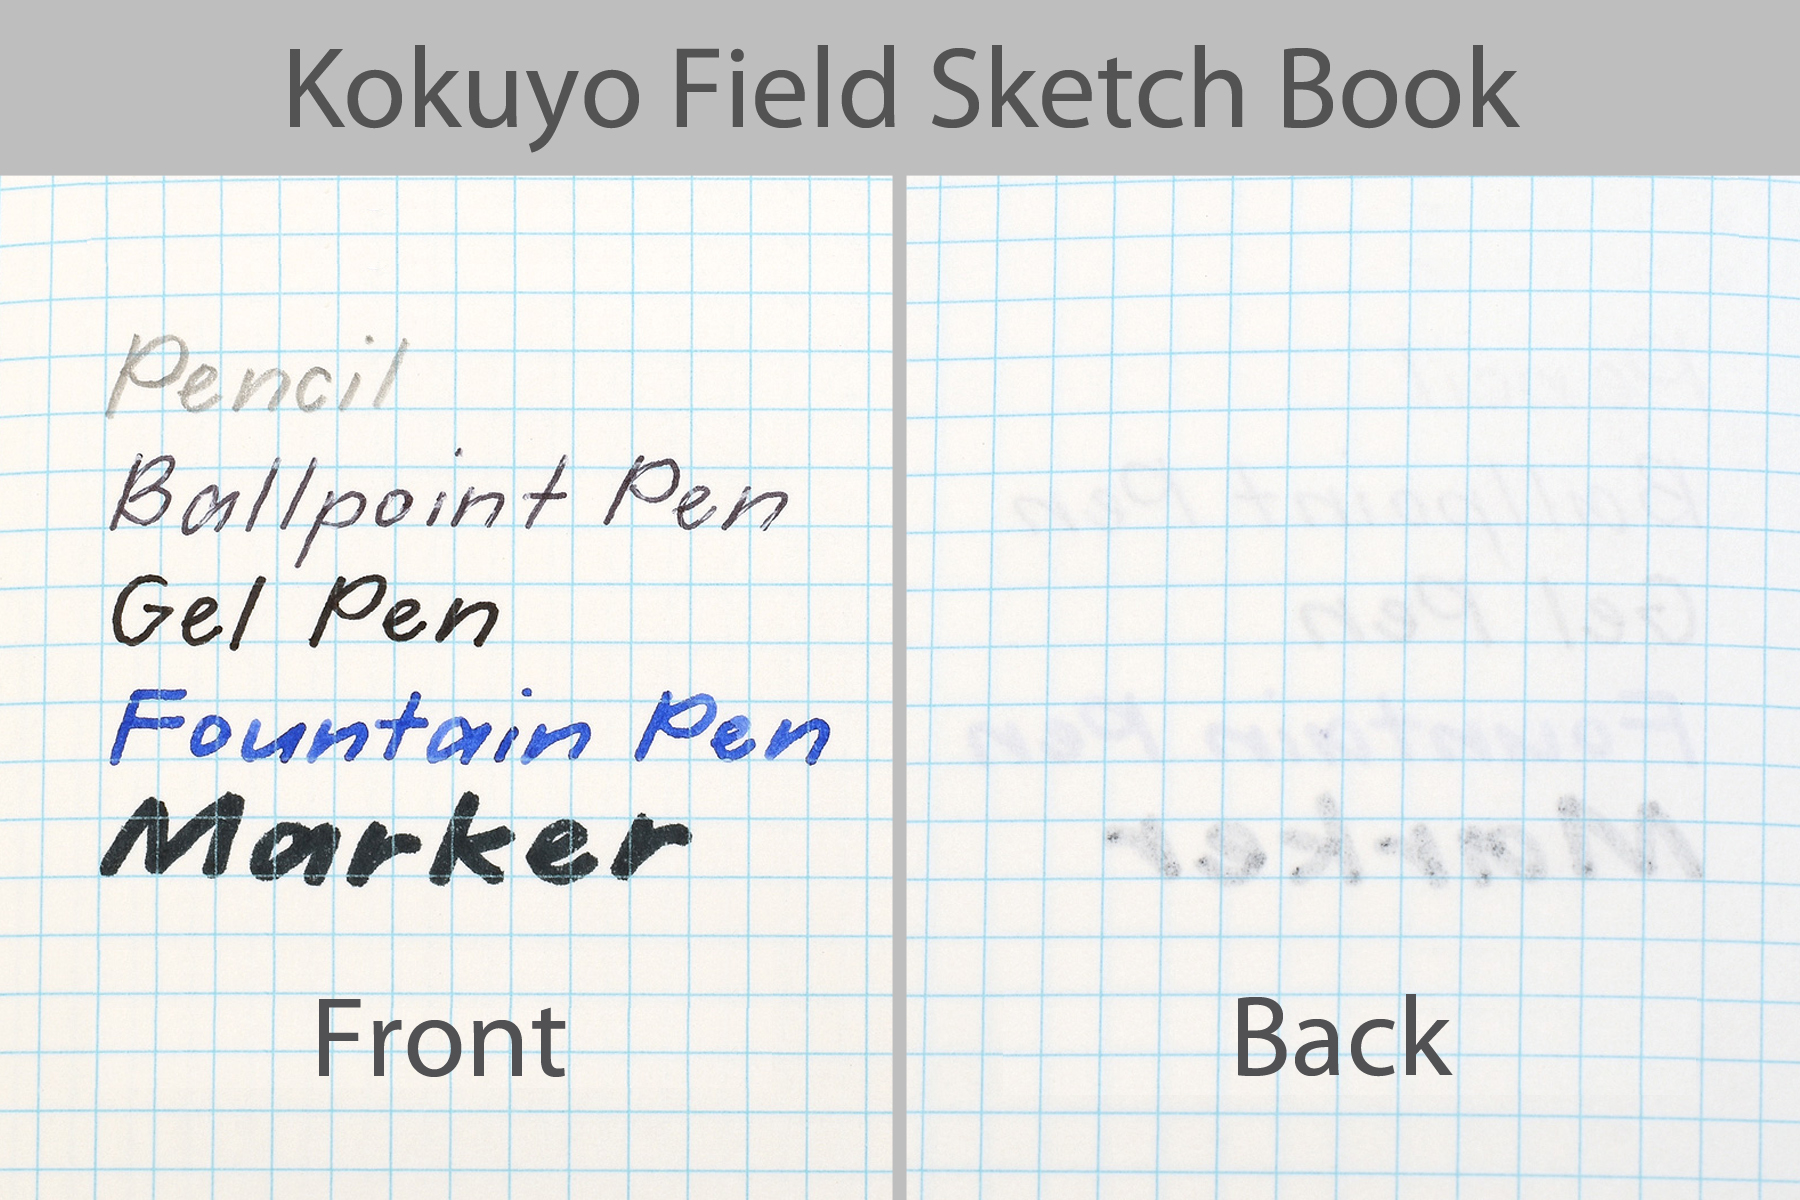 Kokuyo Field Sketch Book writing sample.